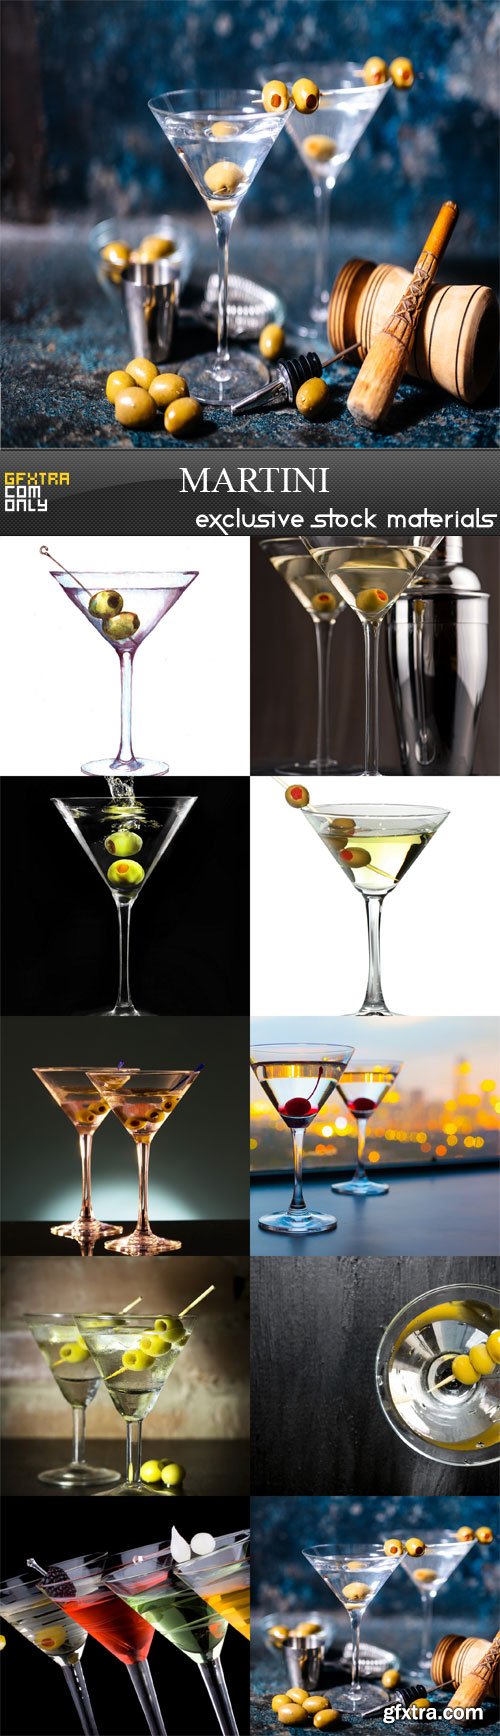 Martini, 10 UHQ JPEG